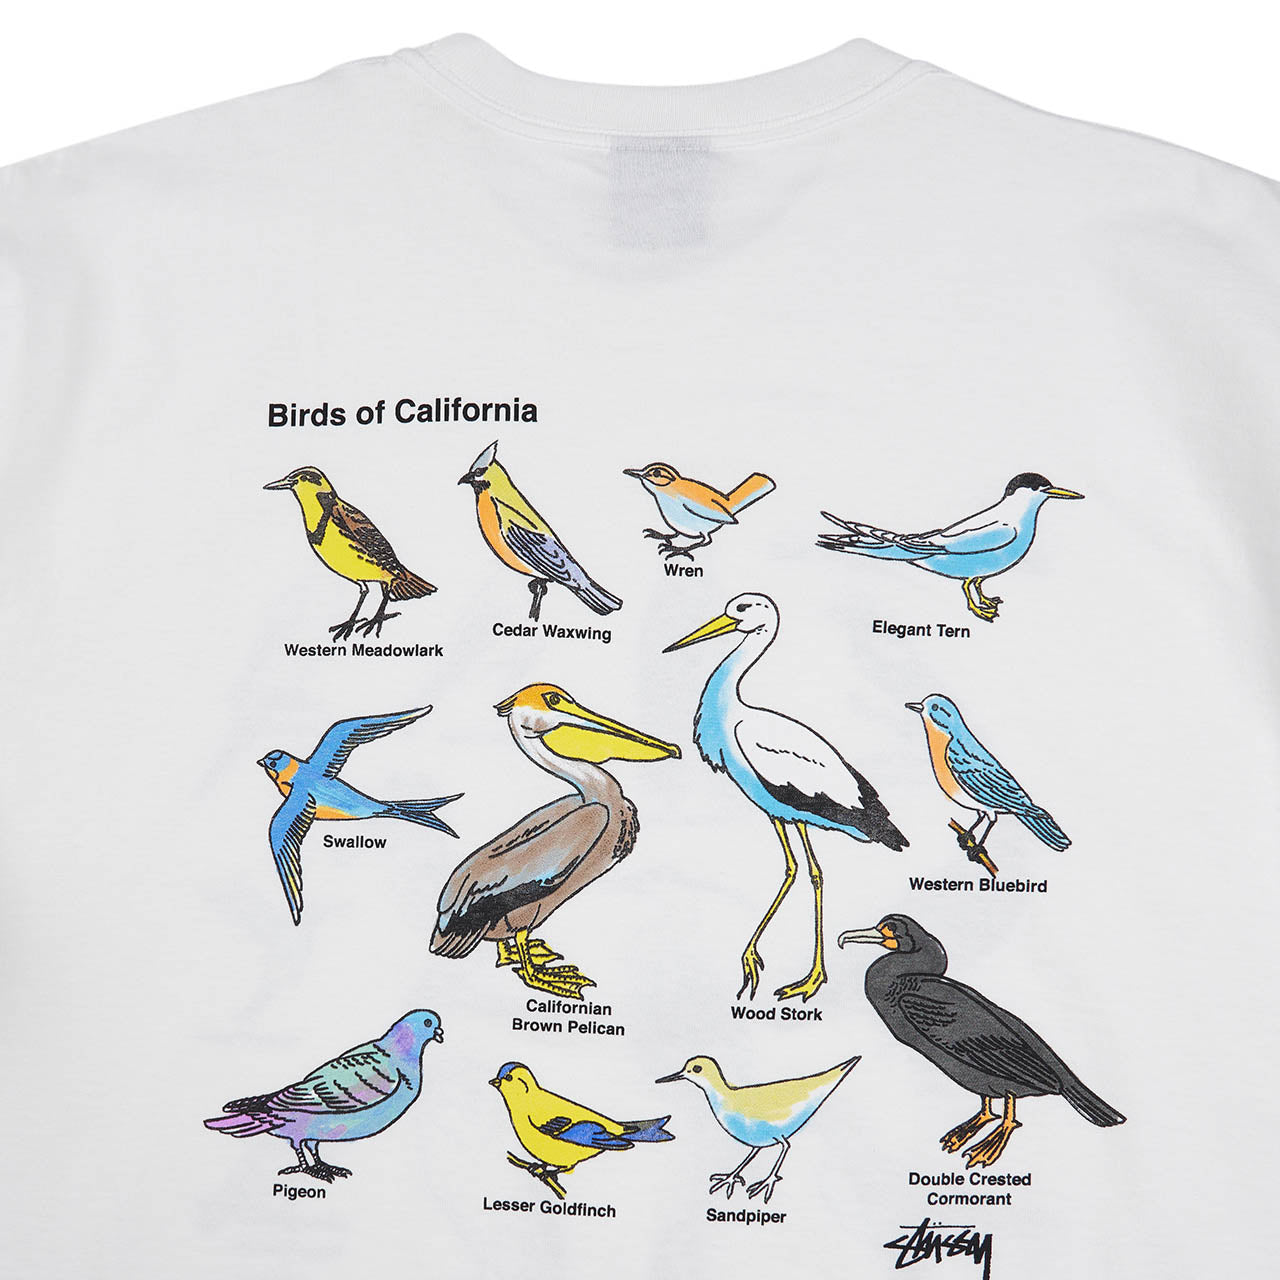 stüssy california birds t-shirt (white)